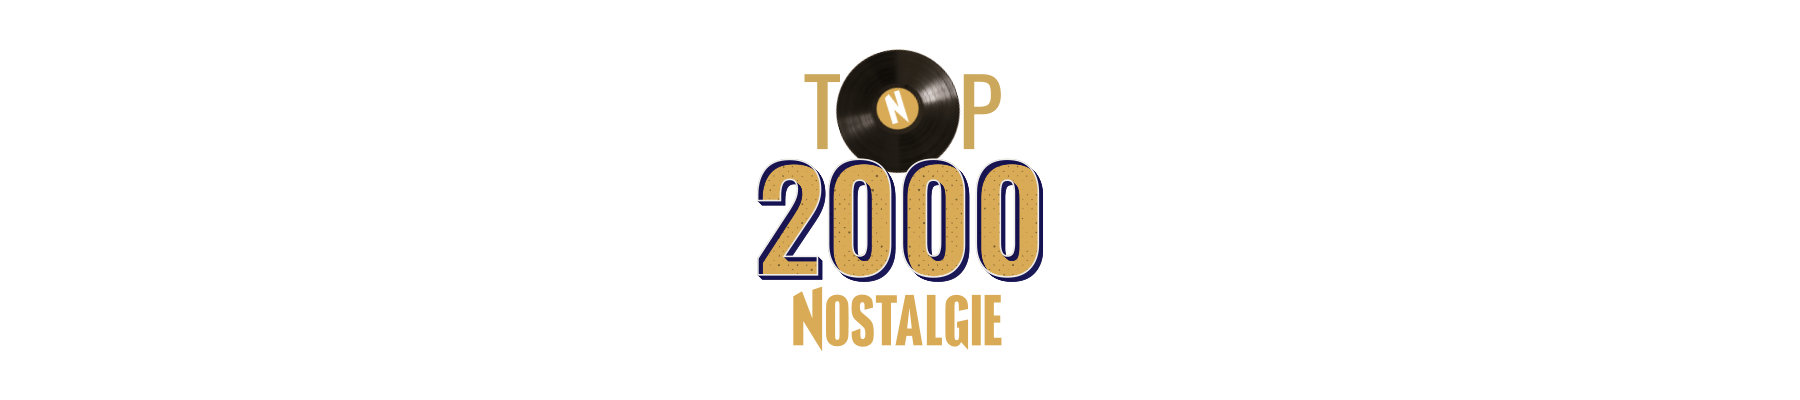 Top 2000 Nostalgie